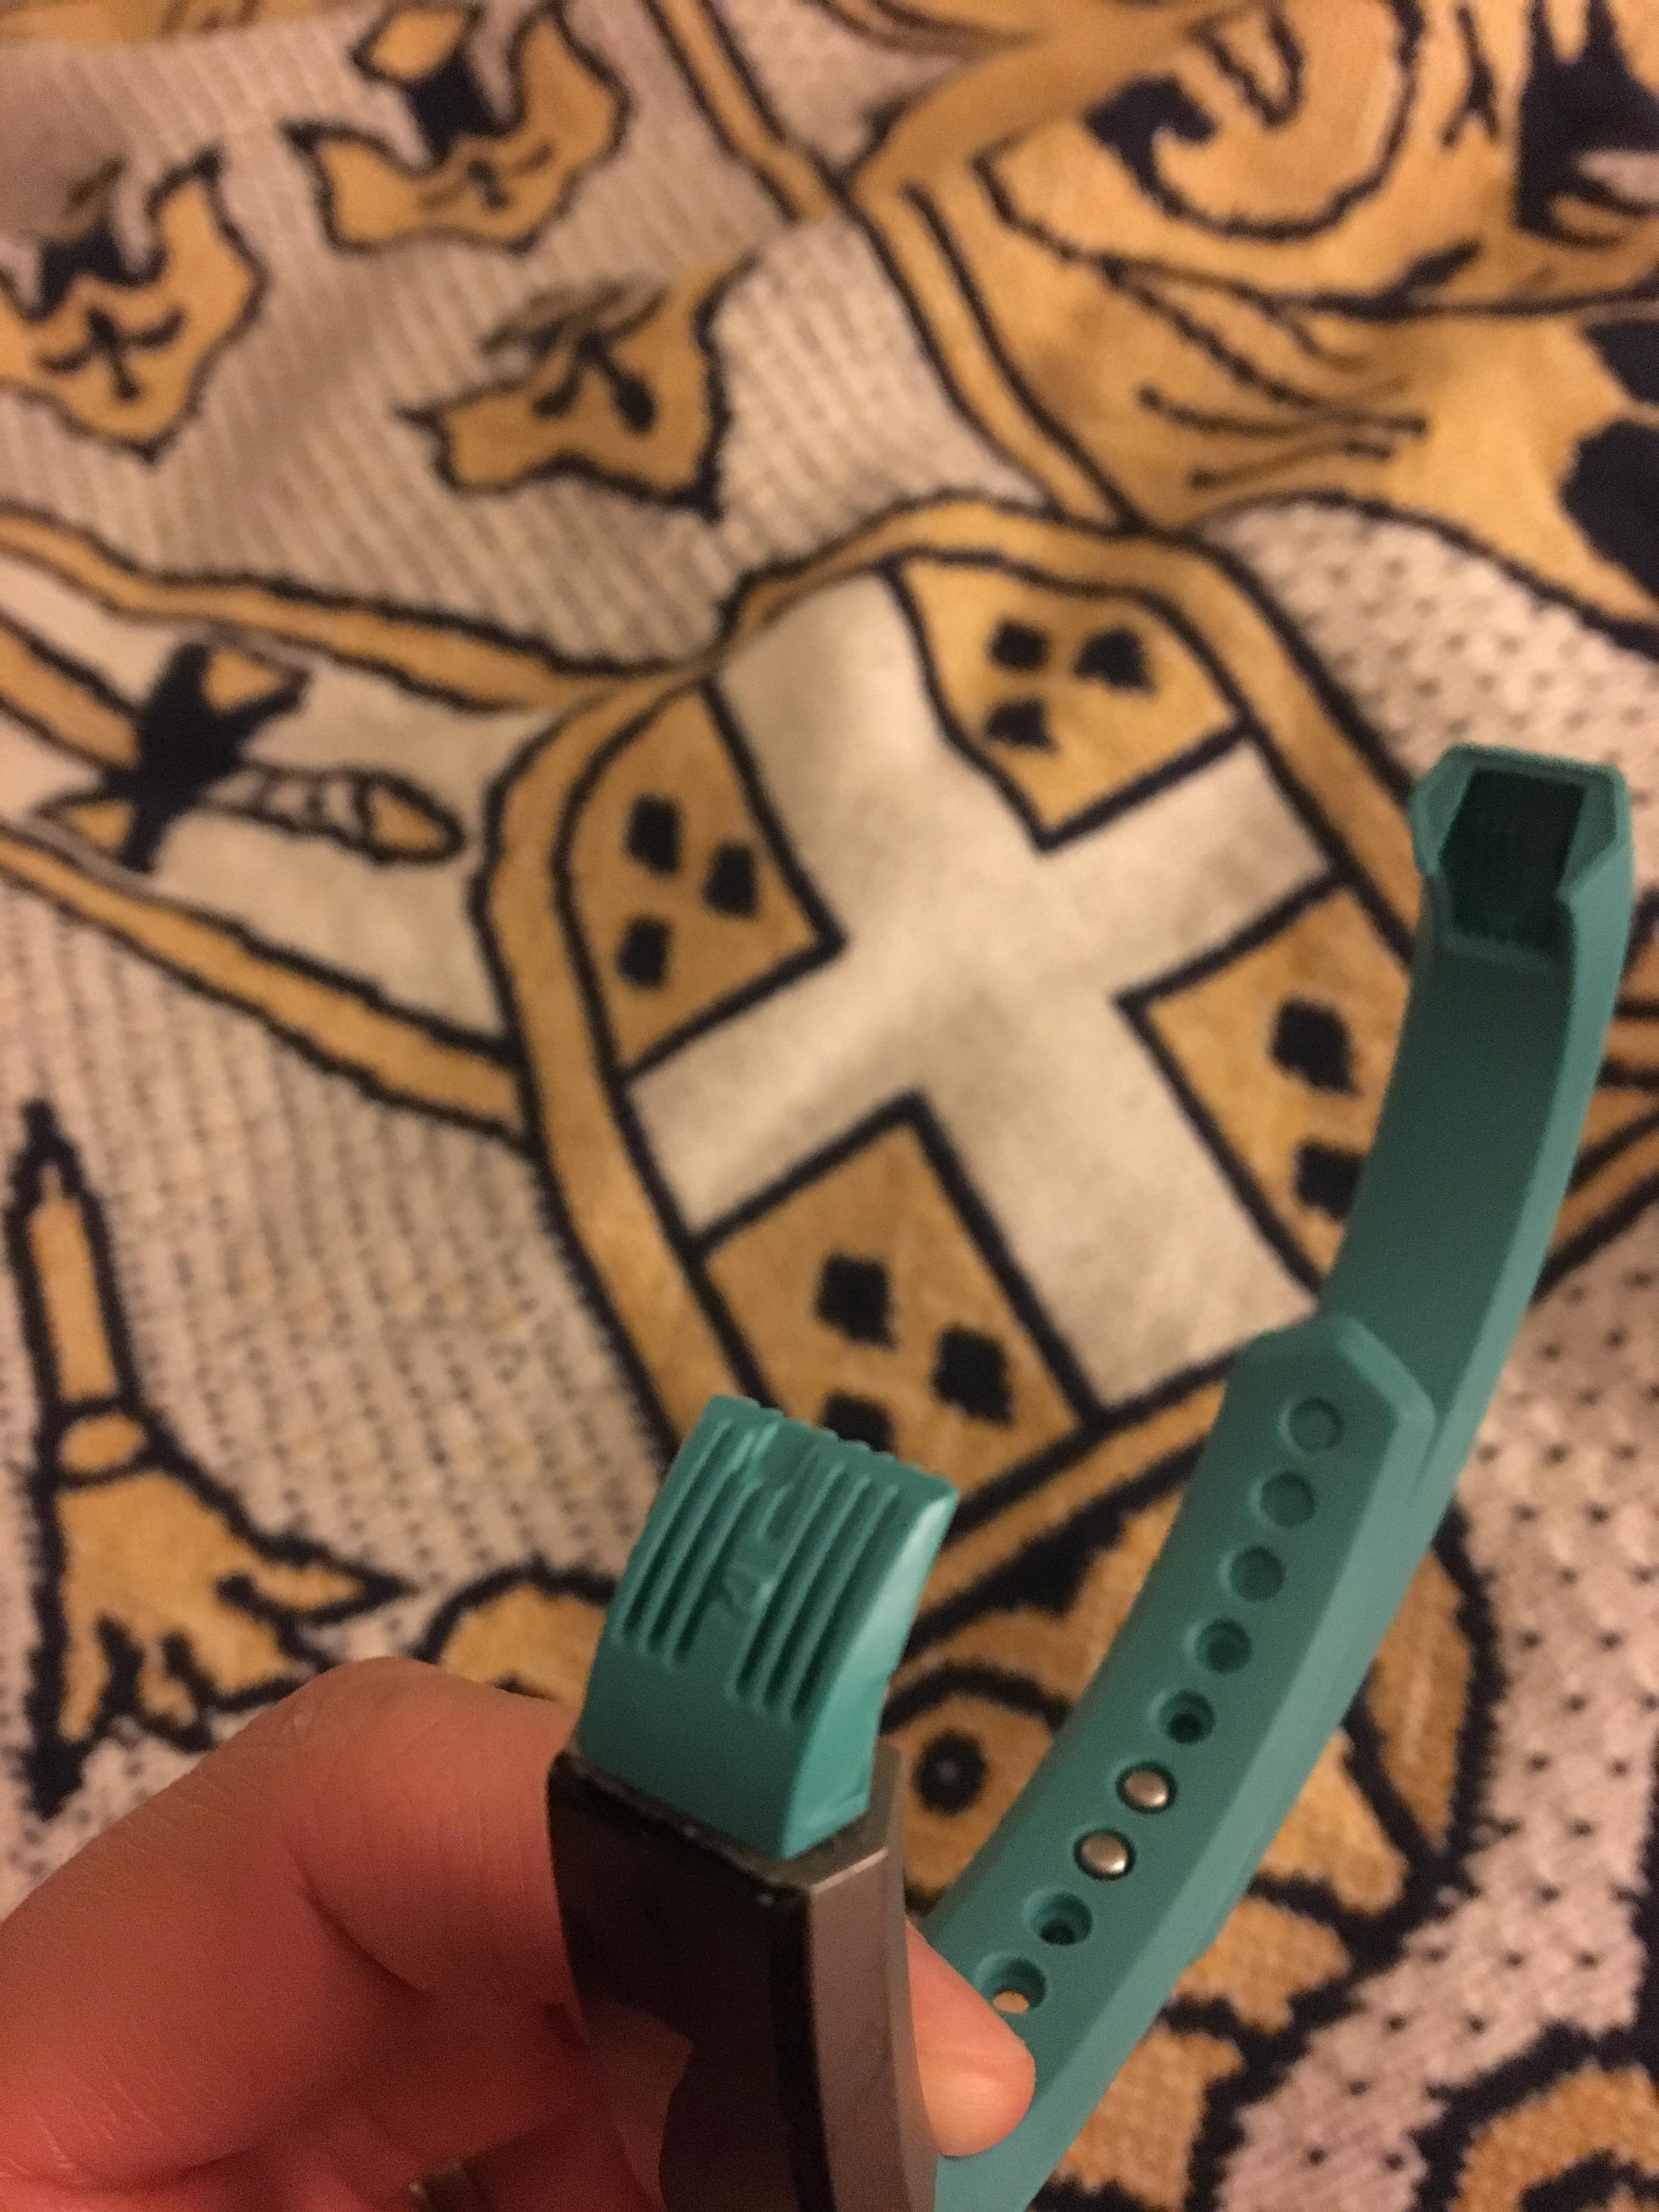 fitbit wristband broken